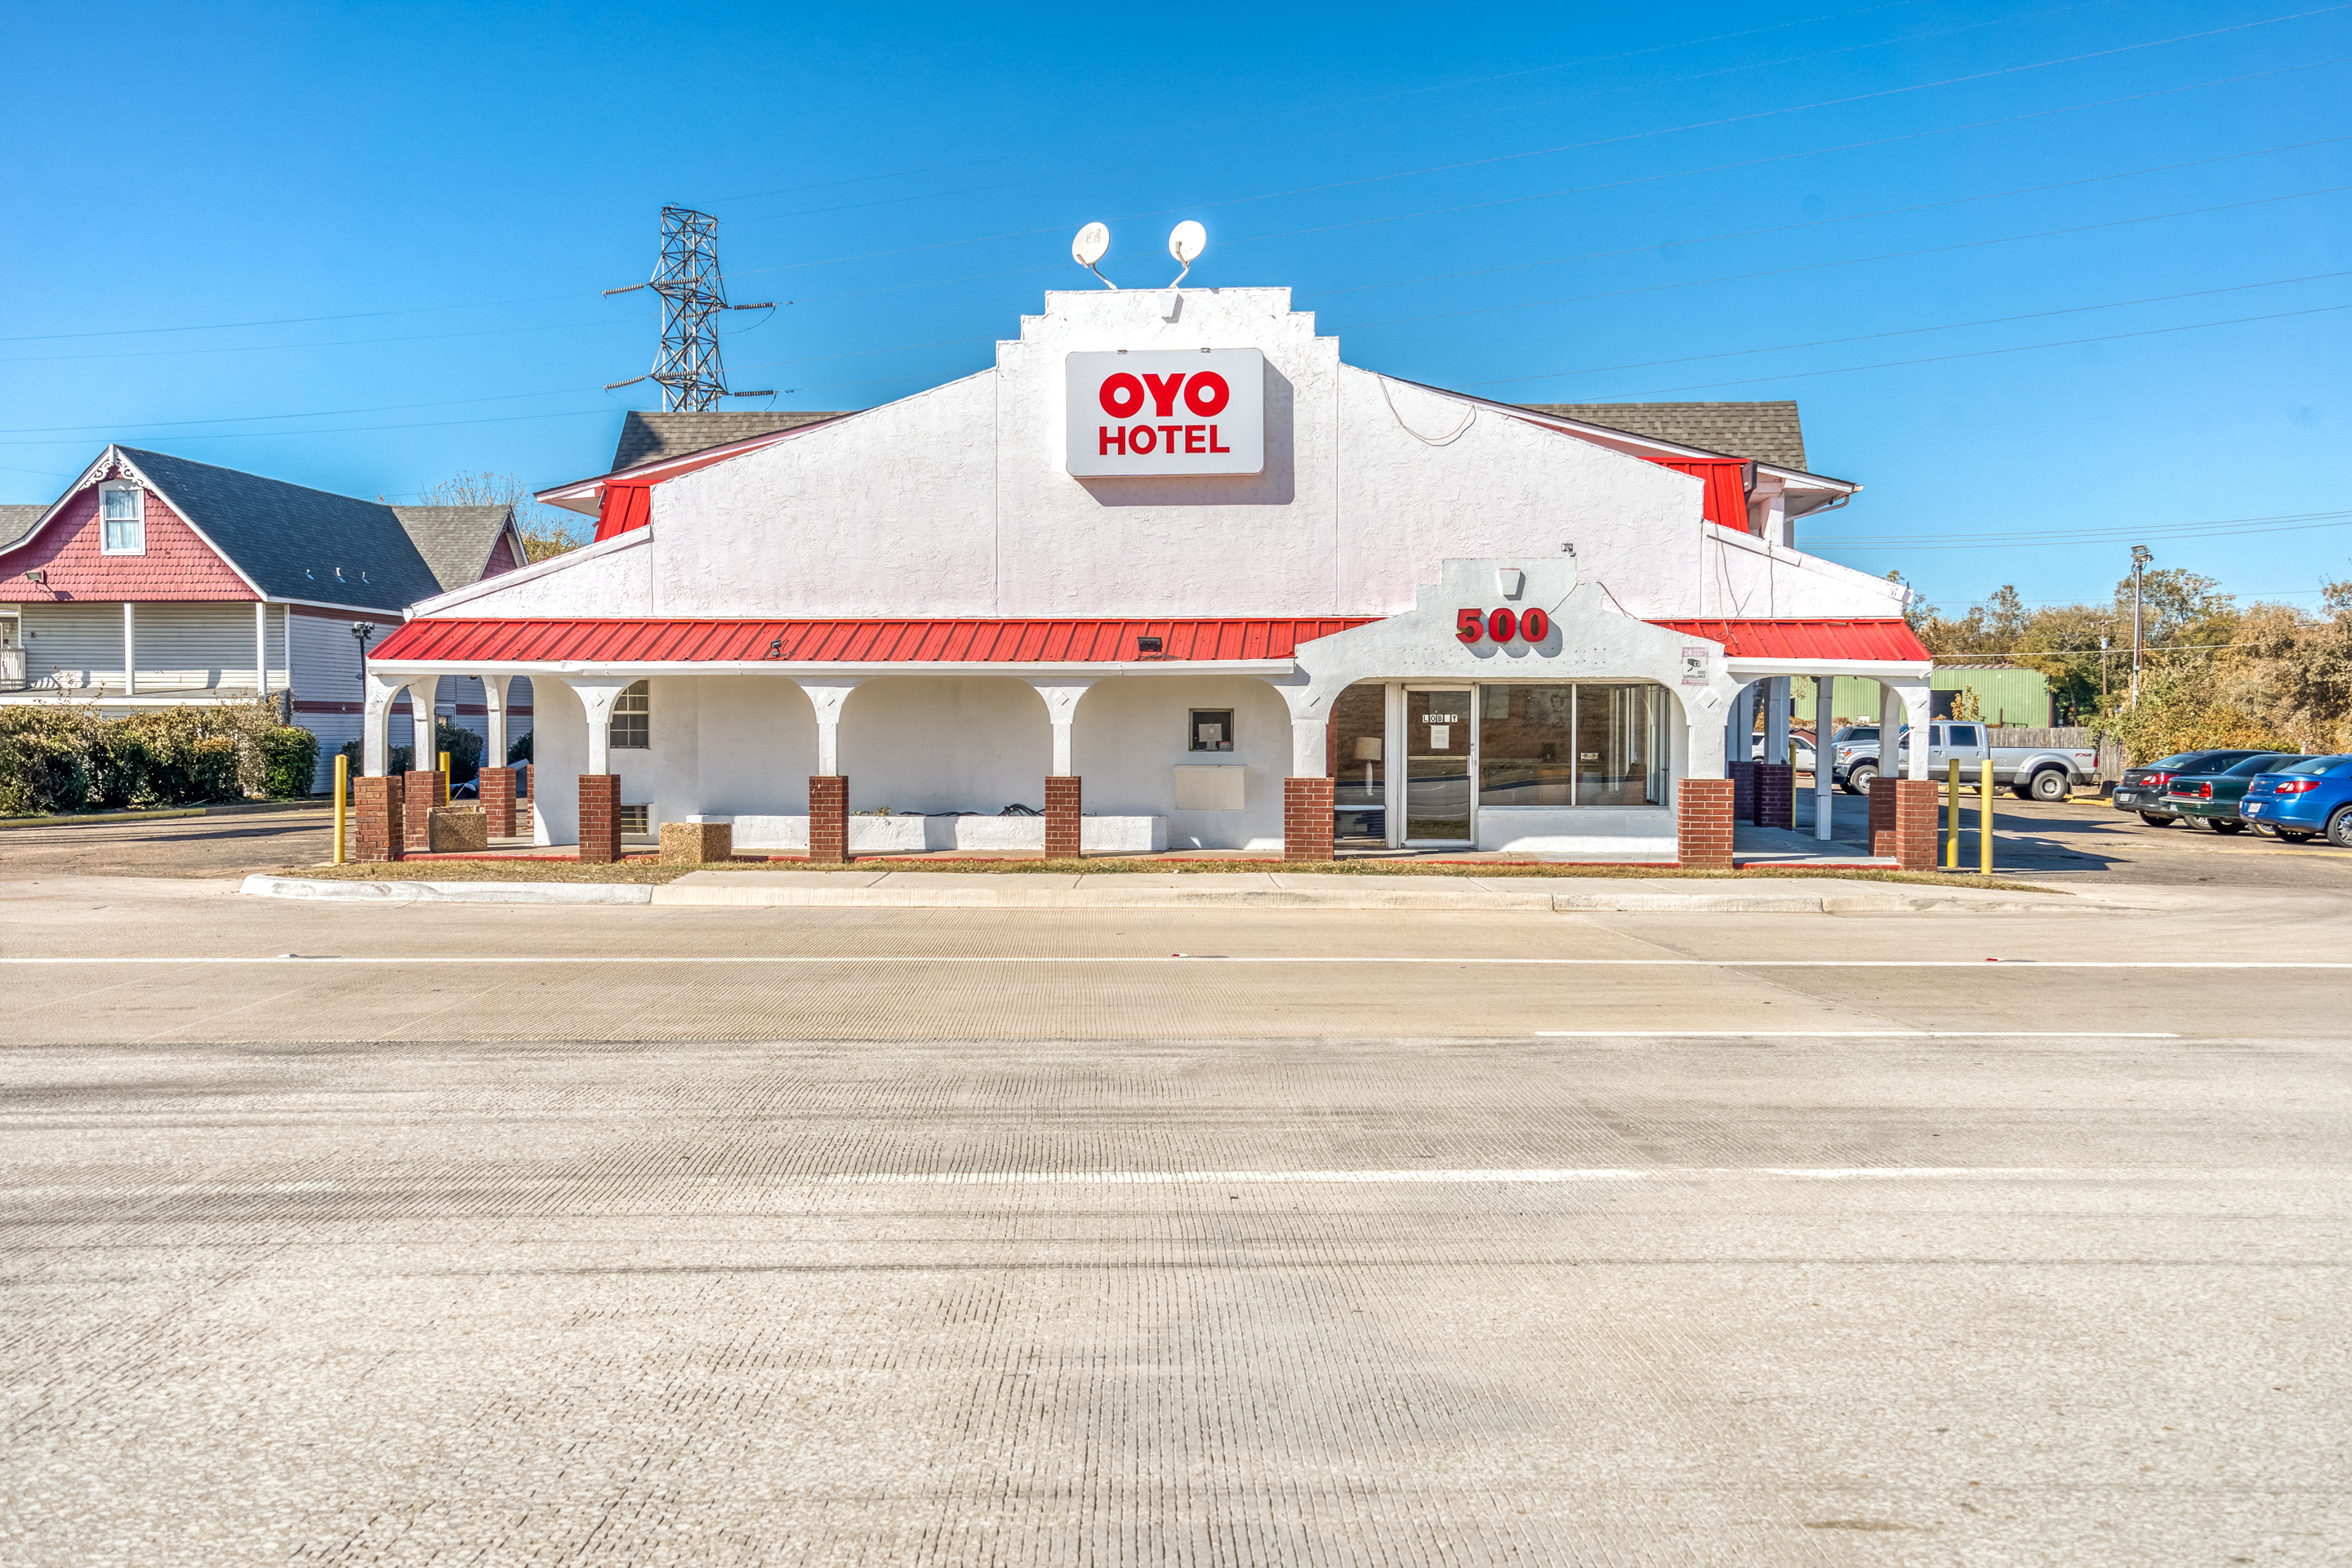 OYO Hotel Waco Baylor